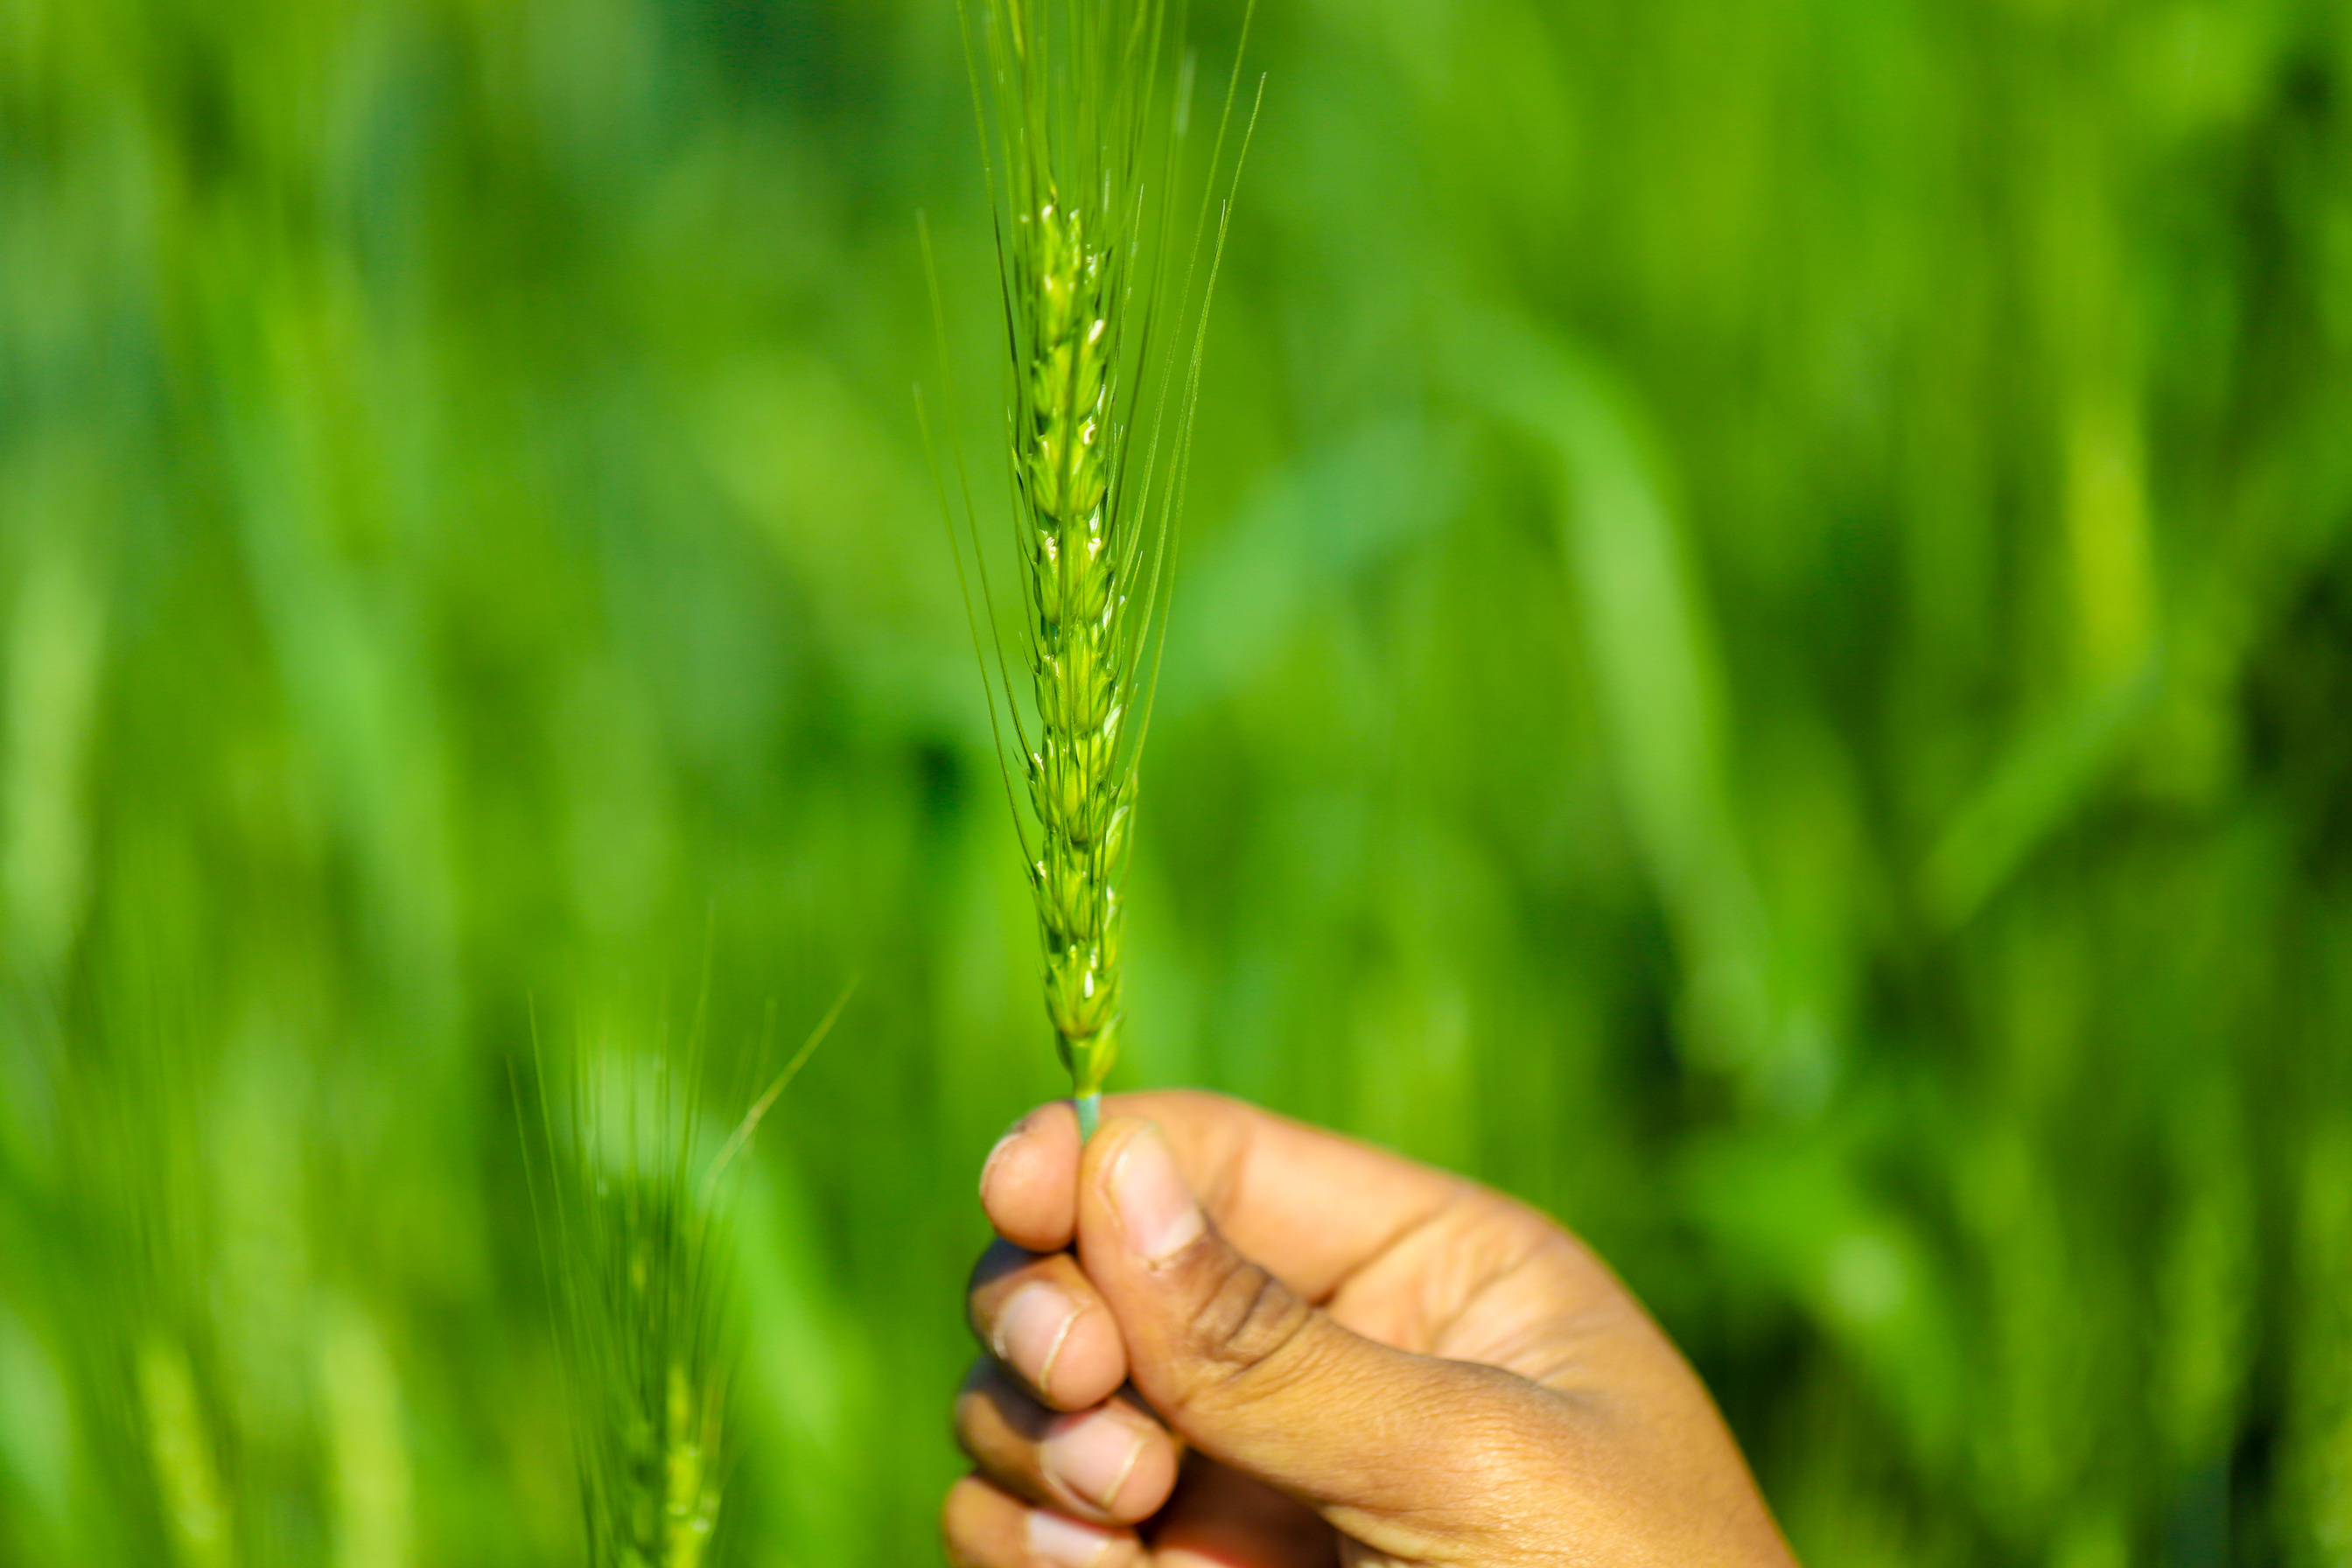 Green wheat farm india